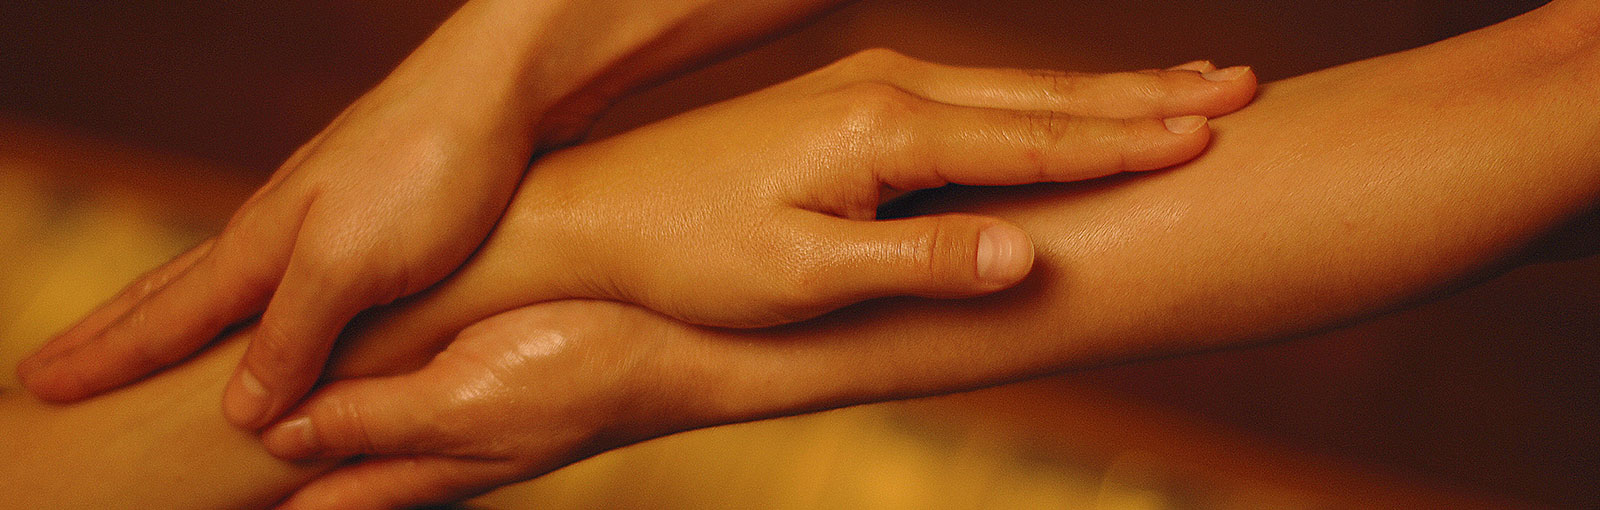 Healing Hand Massage